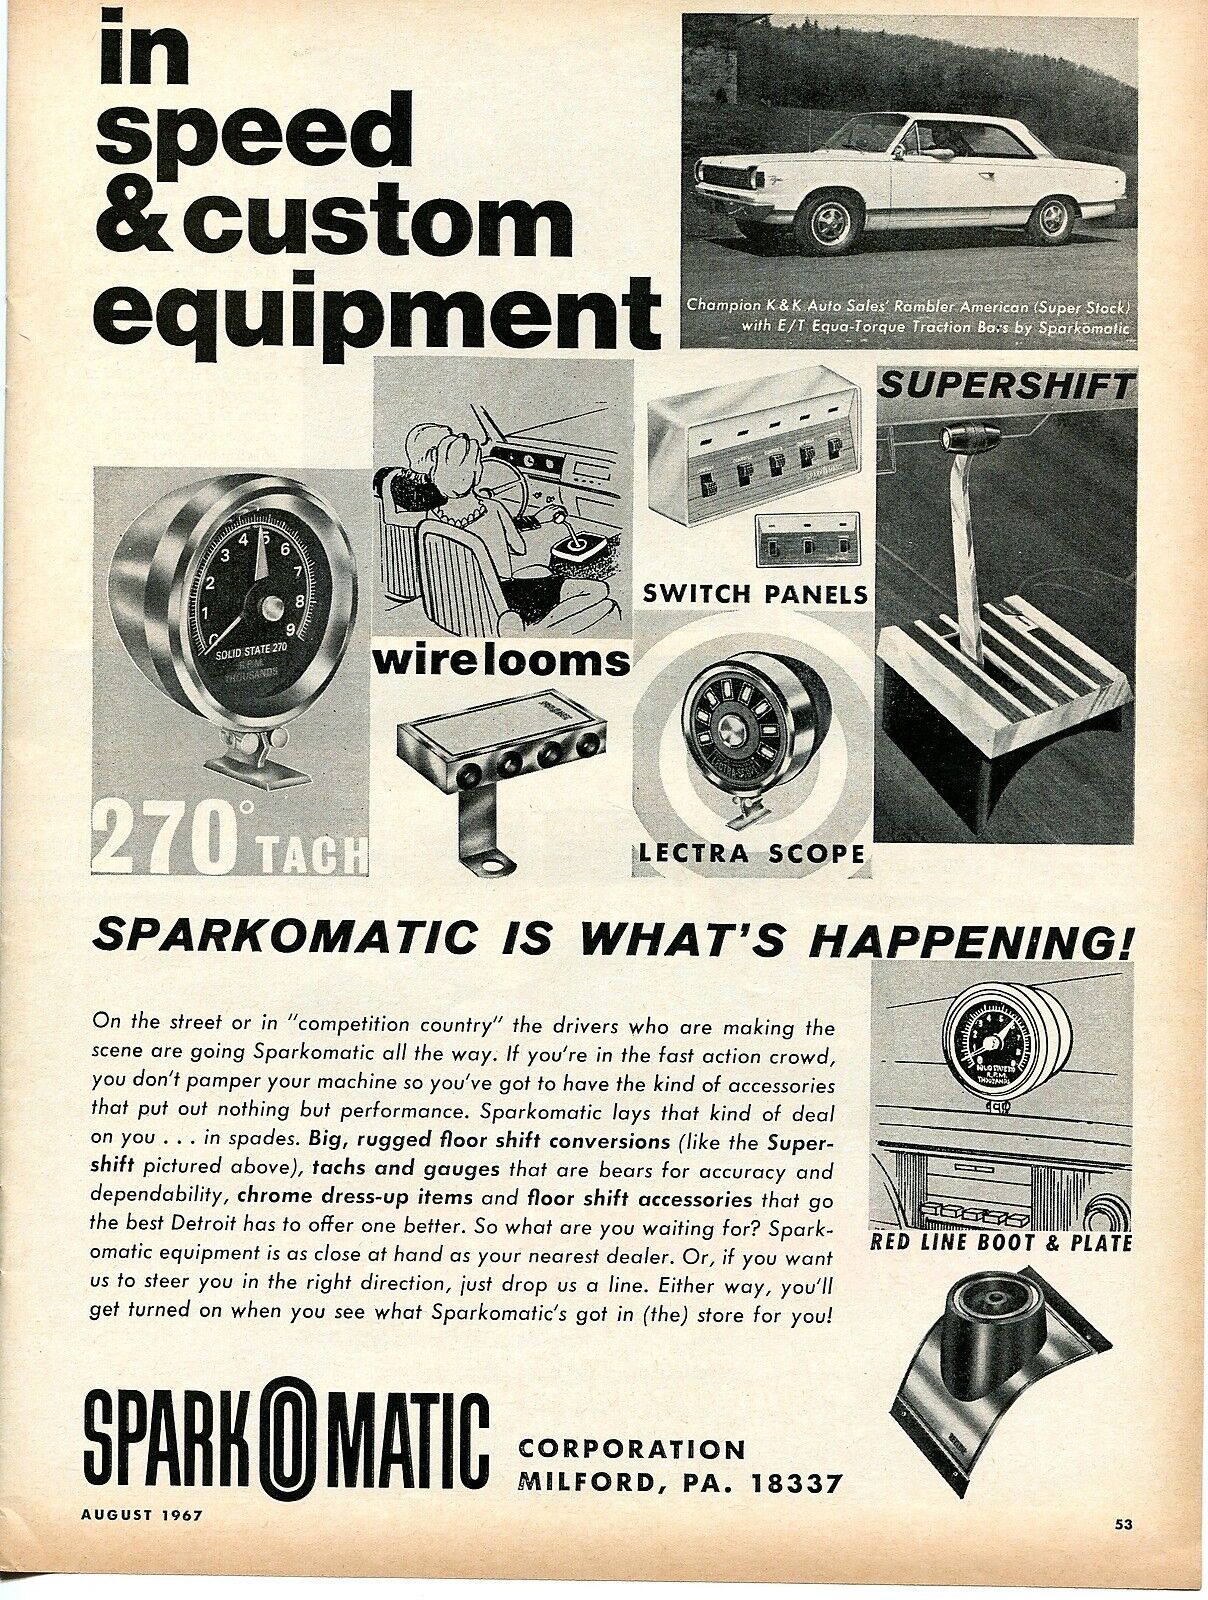 1967 Sparkomatic Tach Switch Panels Scope & Shifter Ad w/ Rambler American      